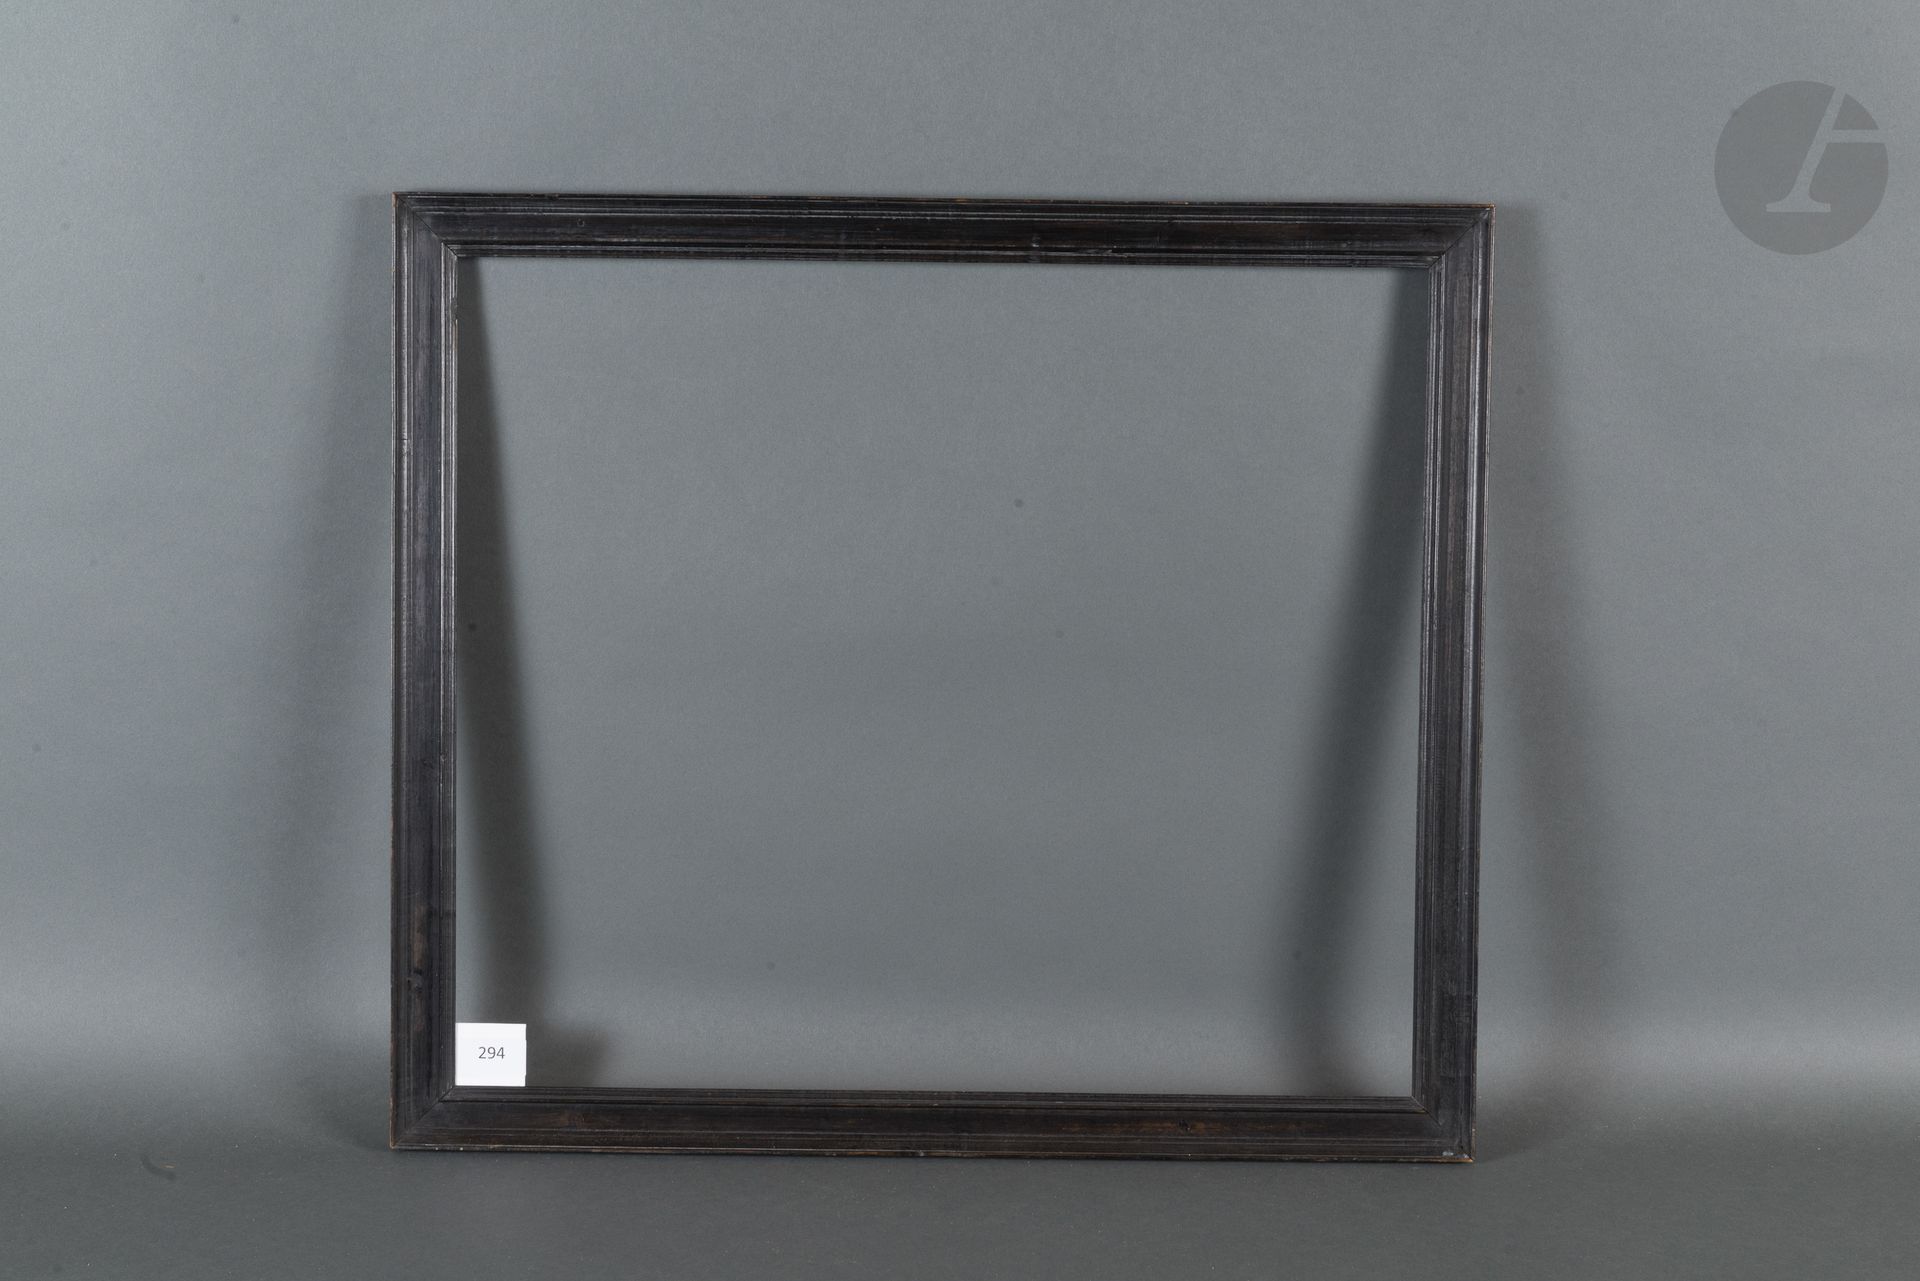 Null 模制和发黑的胡桃木卡塞塔框架。
19世纪。
44,5 x 51,6厘米 - 外形：3,3厘米